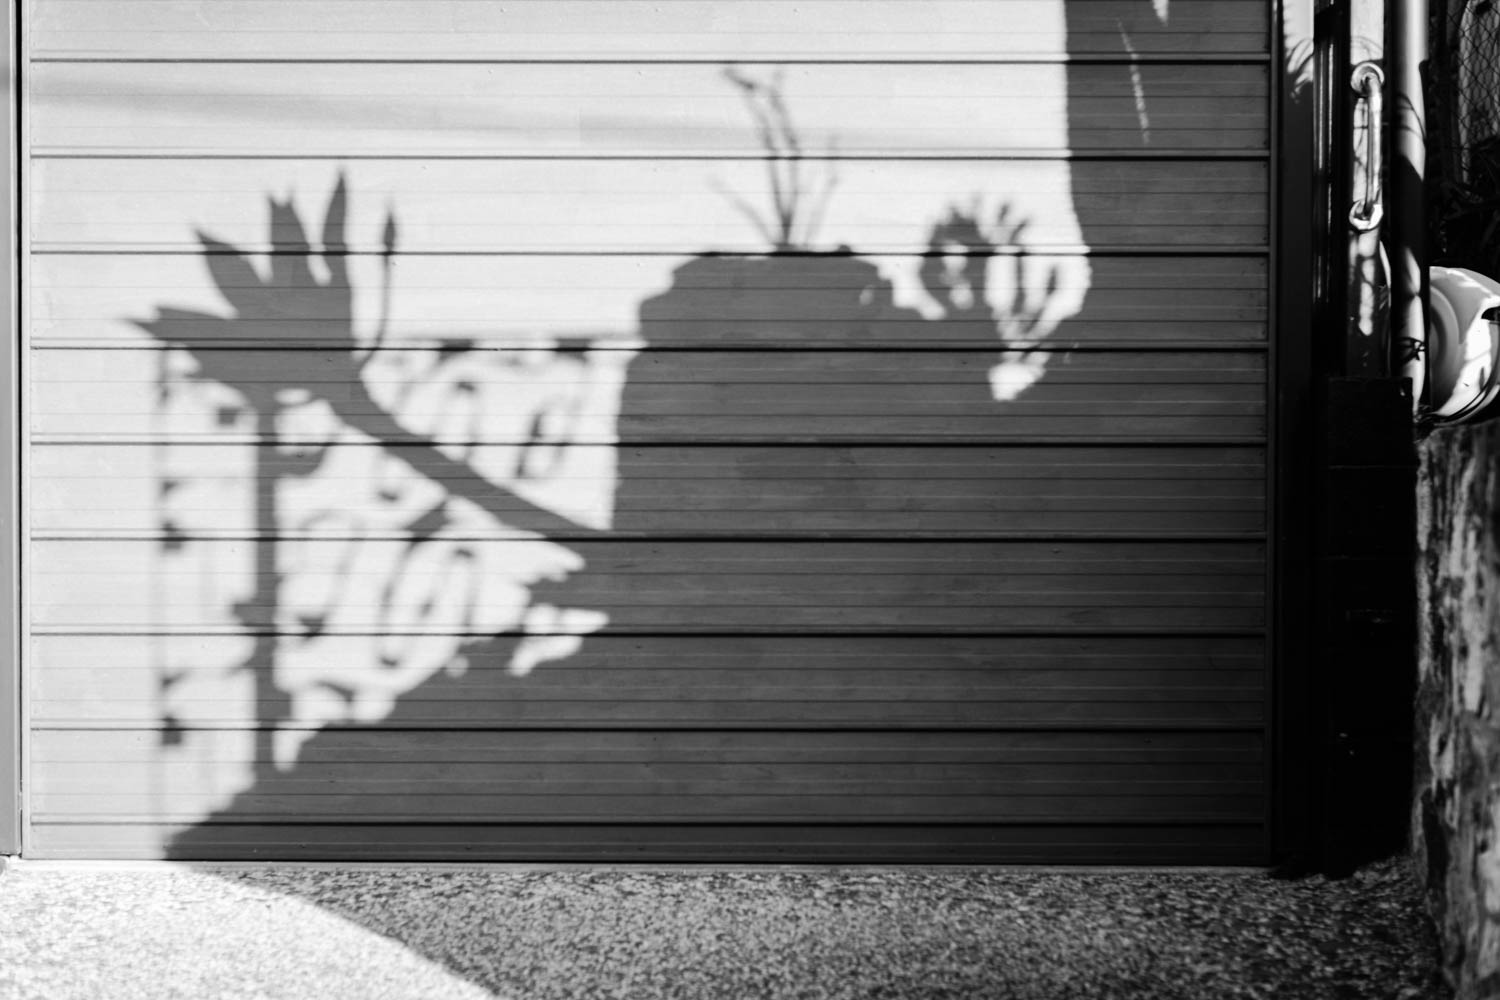 New Farm garden shadow photo on a garage door.